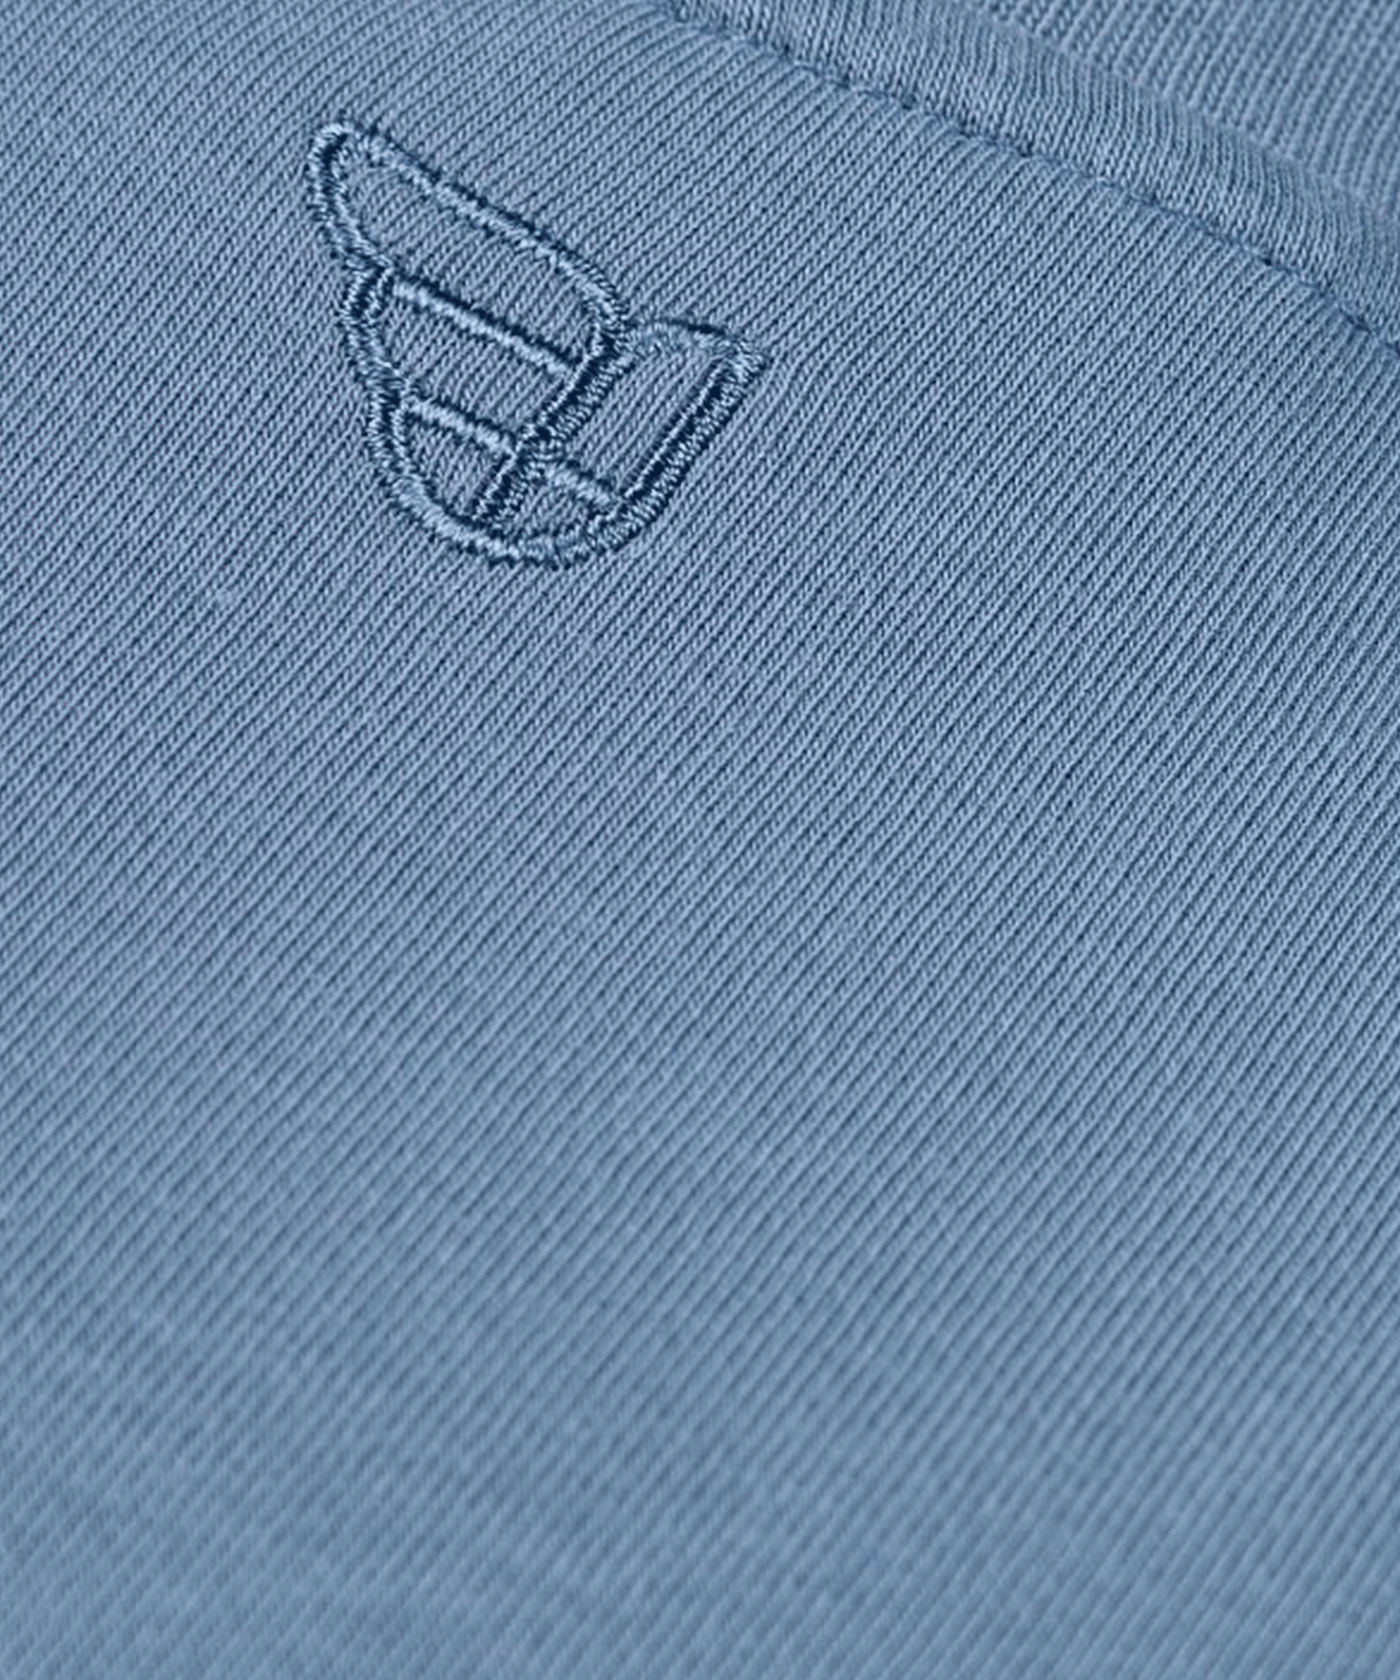 Club 24 - Freedom Fit - T-shirt - Blue Heaven